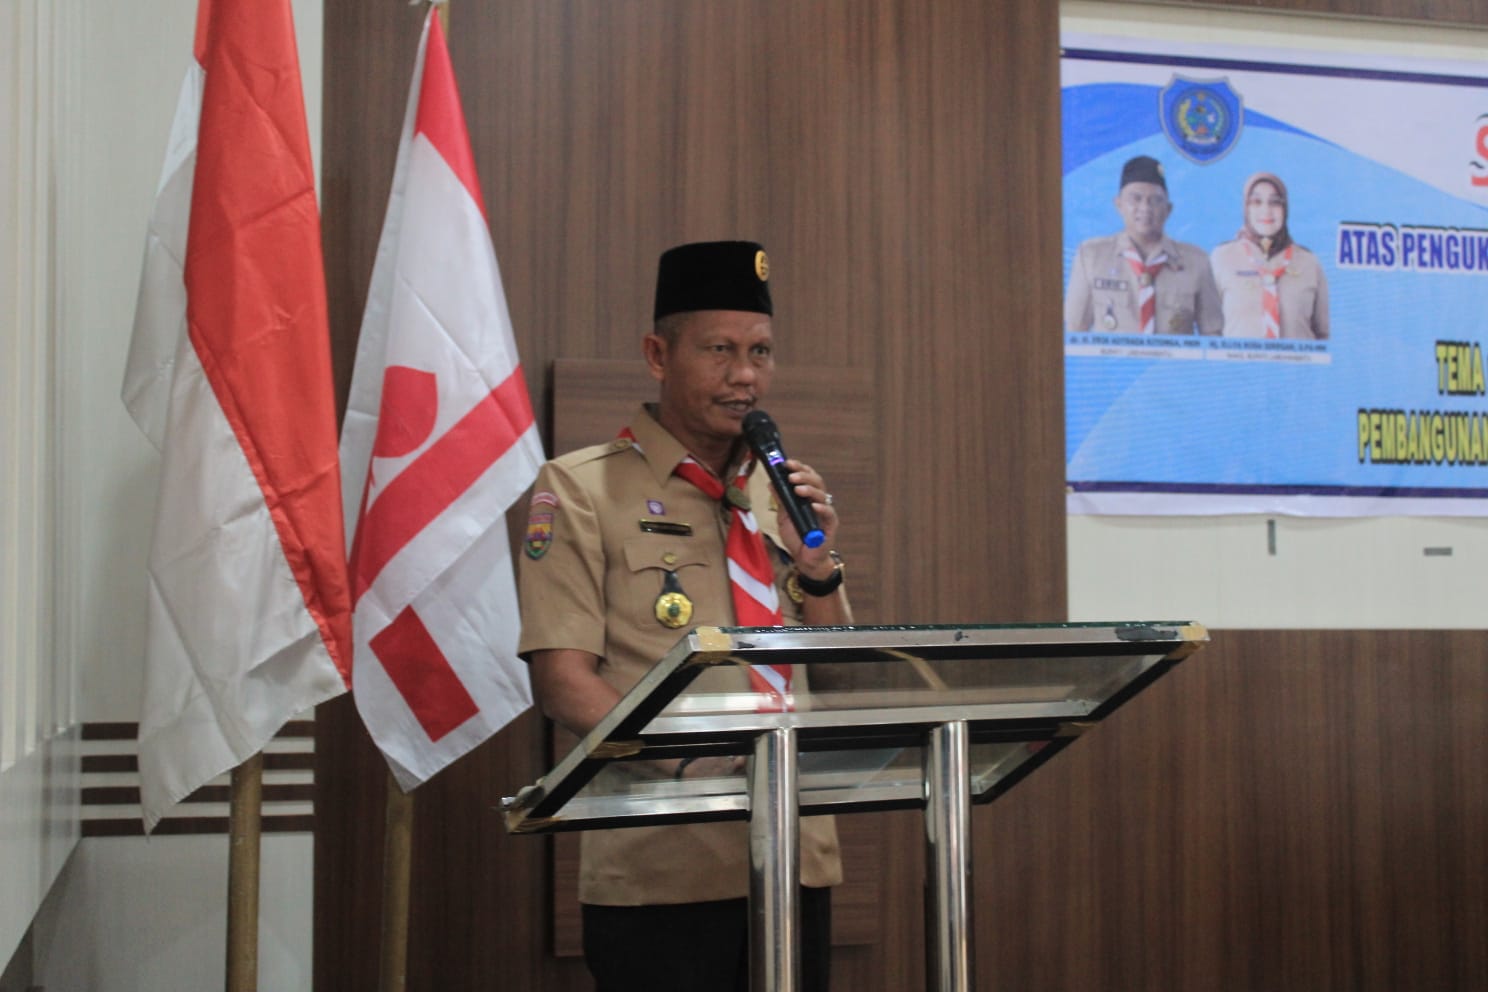 Asisten l Hadiri Pengukuhan Pengurus Saka Kencana Kabupaten Labuhanbatu Periode 2022 - 2026